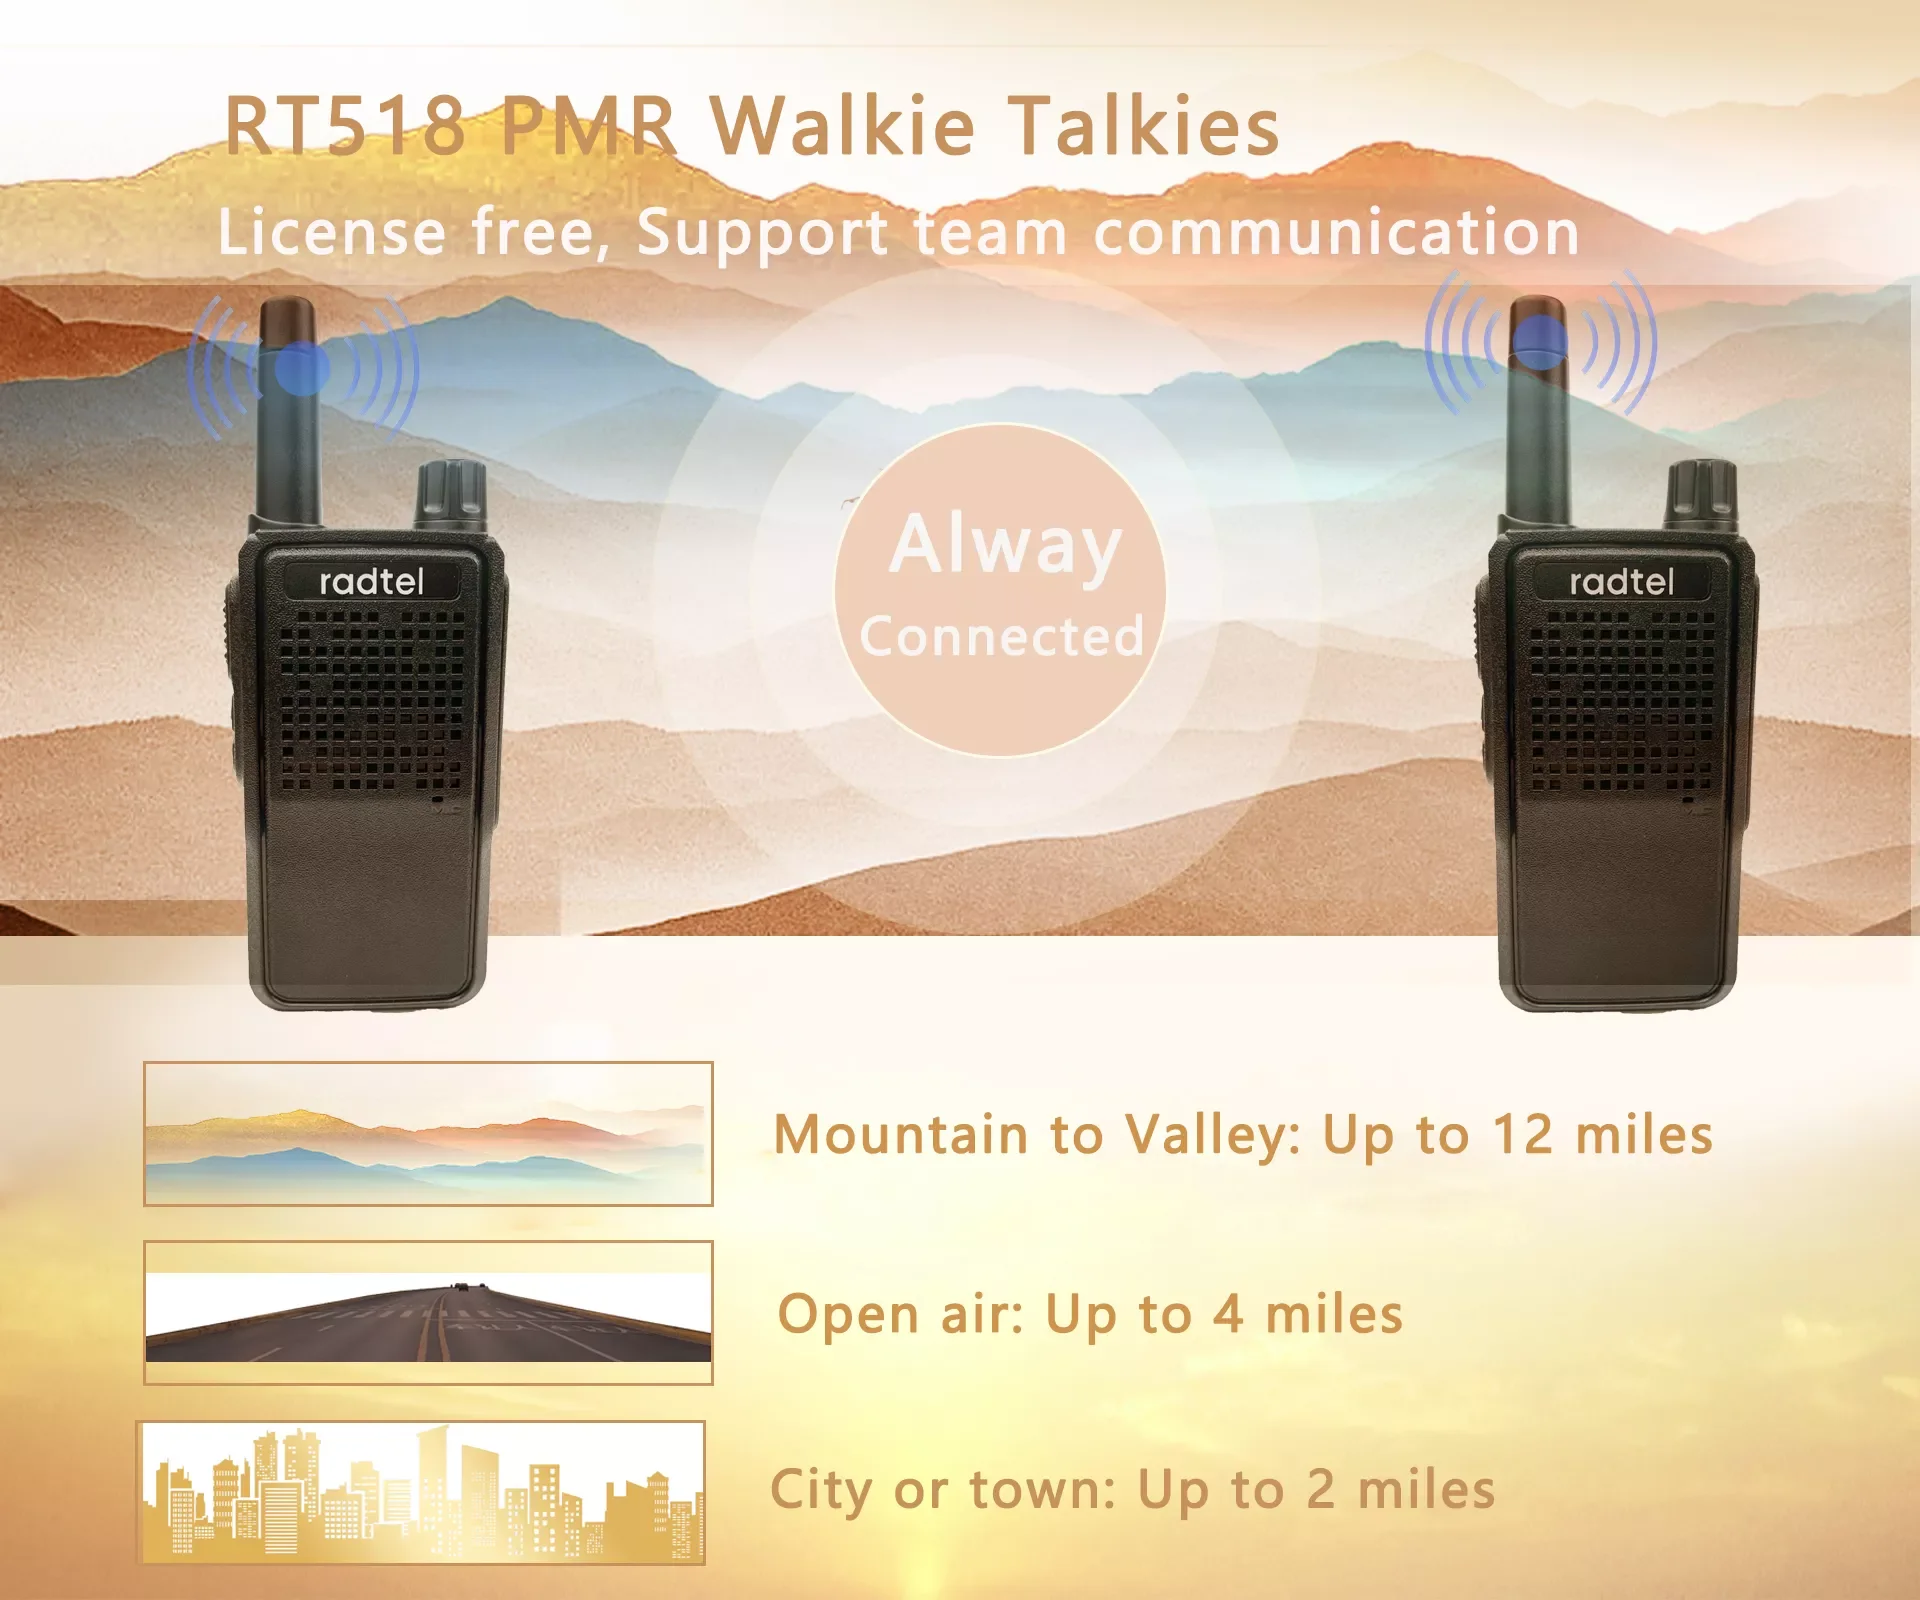 pcs Walkie Talkie Radtel RT518 22CH Two Way Radio PMR  FRS Radio Comunicador Long Range Walkie-Talkie for Camping Business enlarge